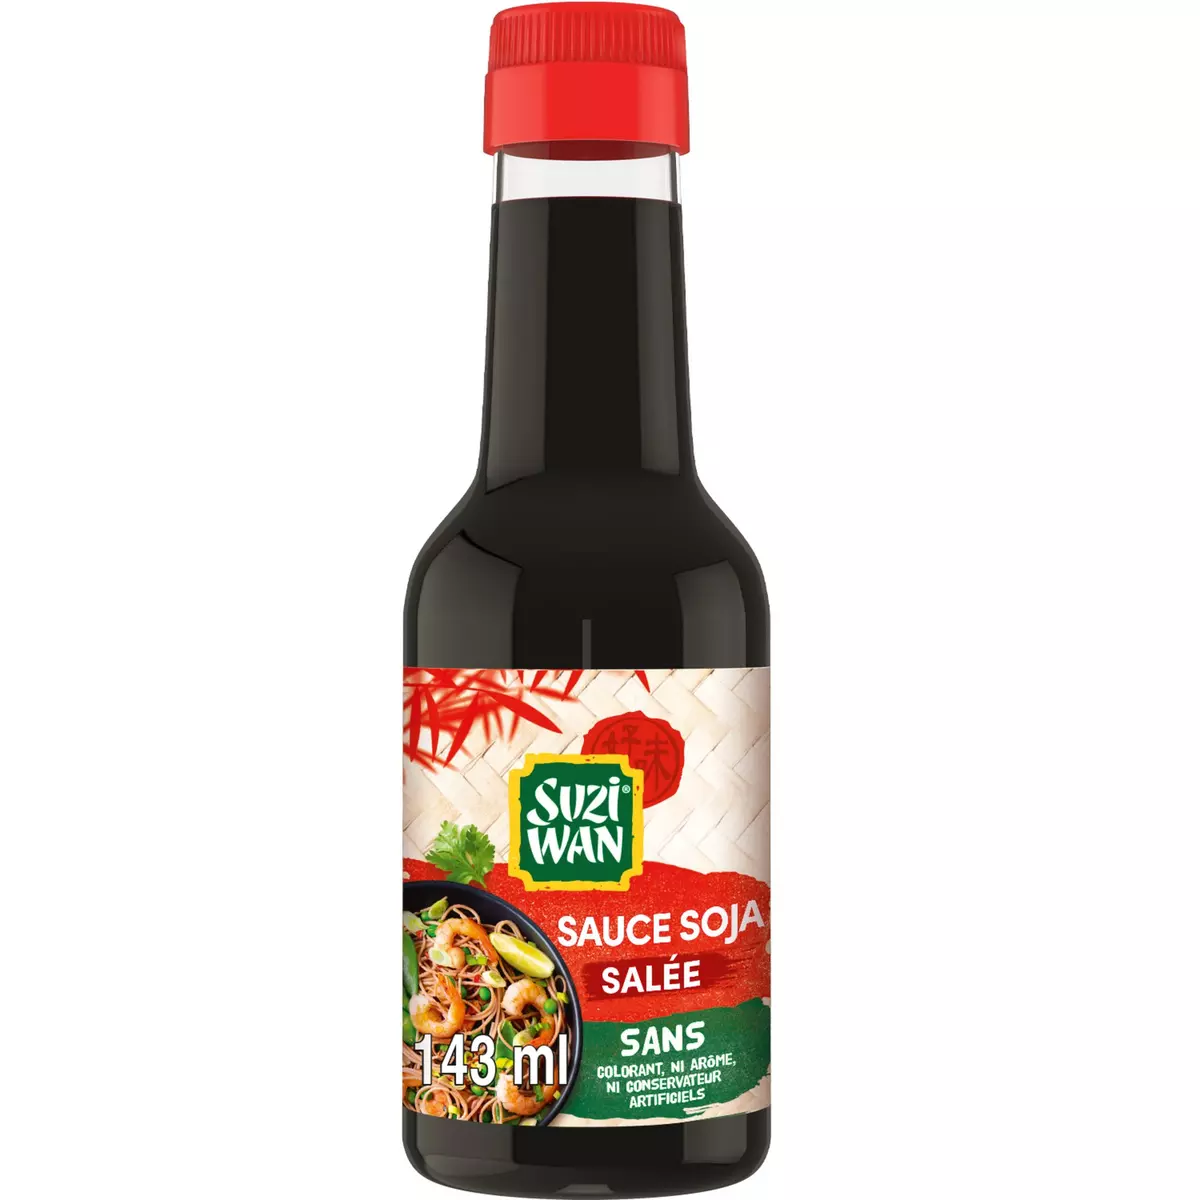 SUZI WAN Sauce soja salée 143ml